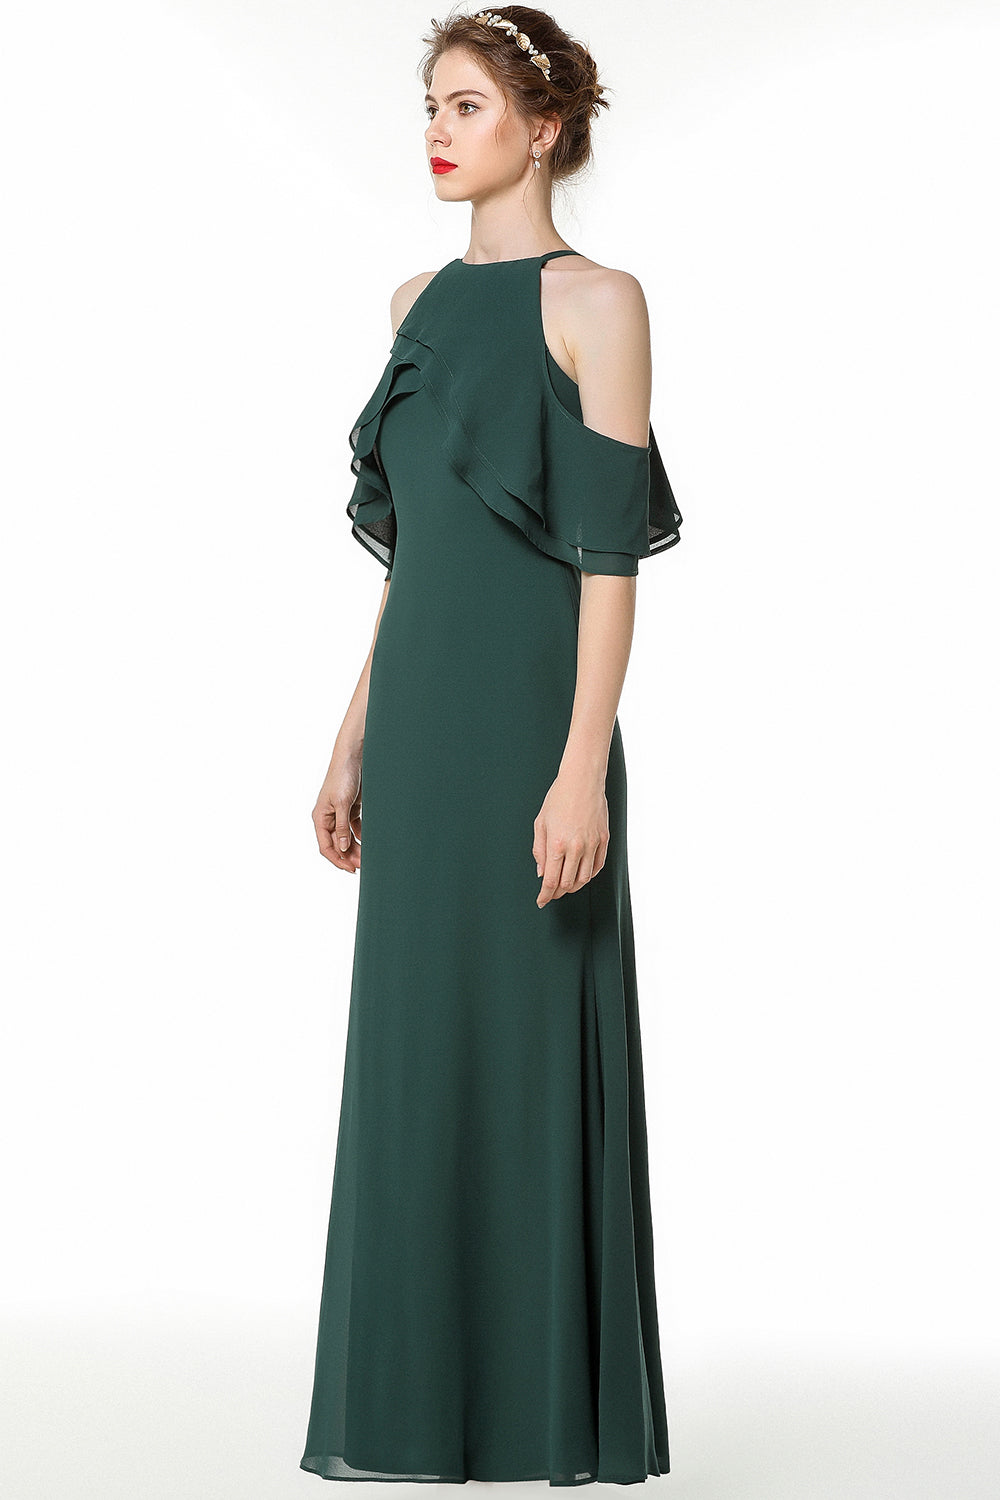 Affordable Cold-shoulder Ruffle Dark Green Bridesmaid Dresses Online